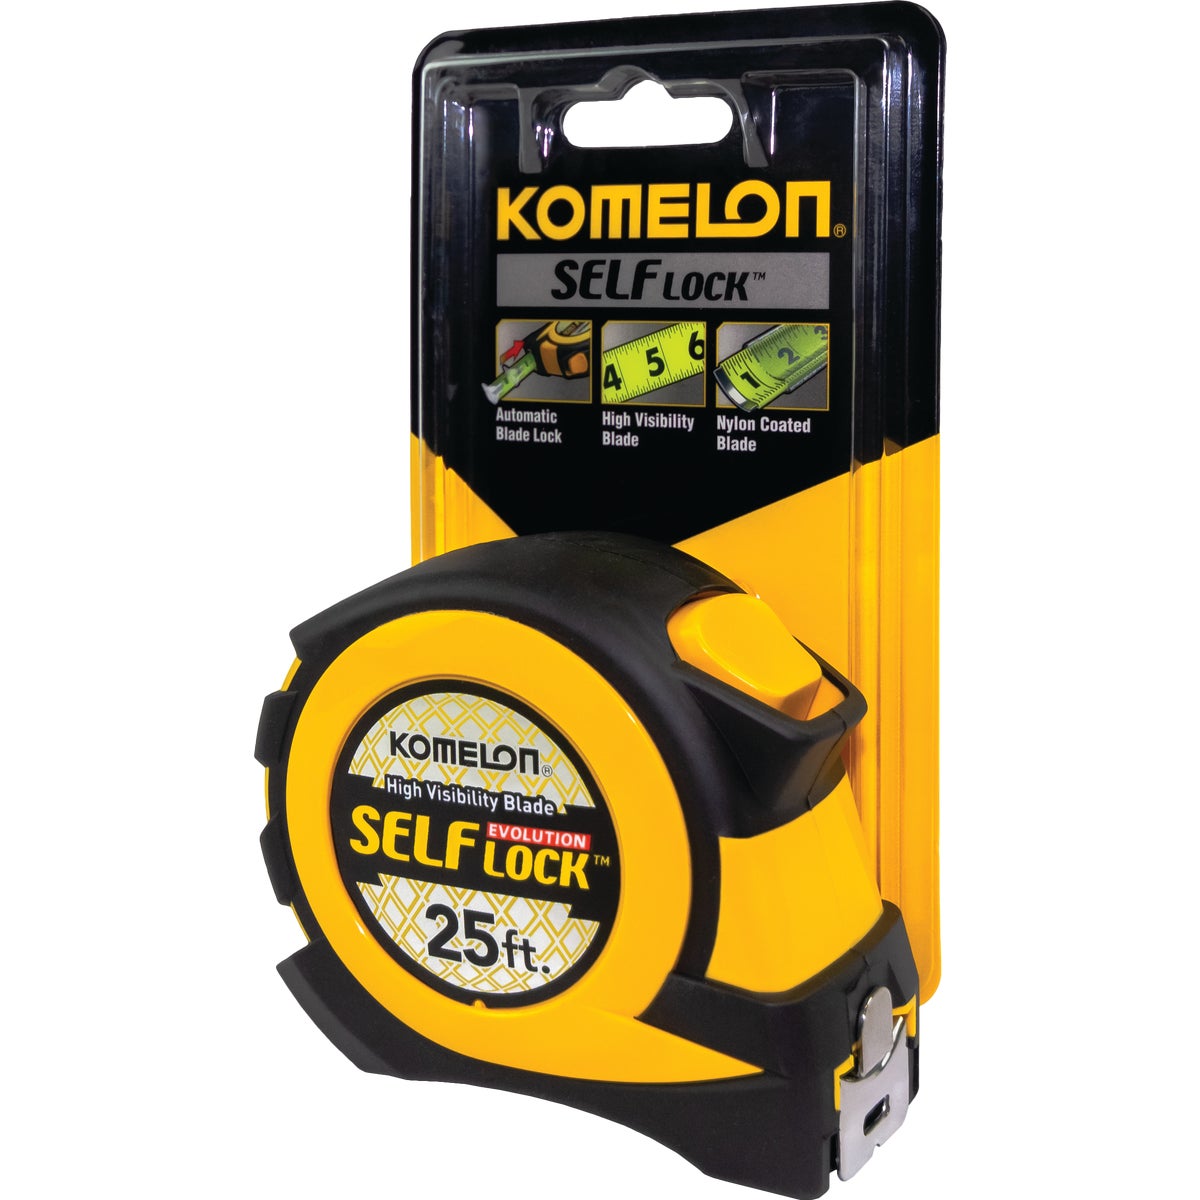 Komelon EV2825 Komelon Evolution 25 Ft. Self-Lock Tape Measure EV2825